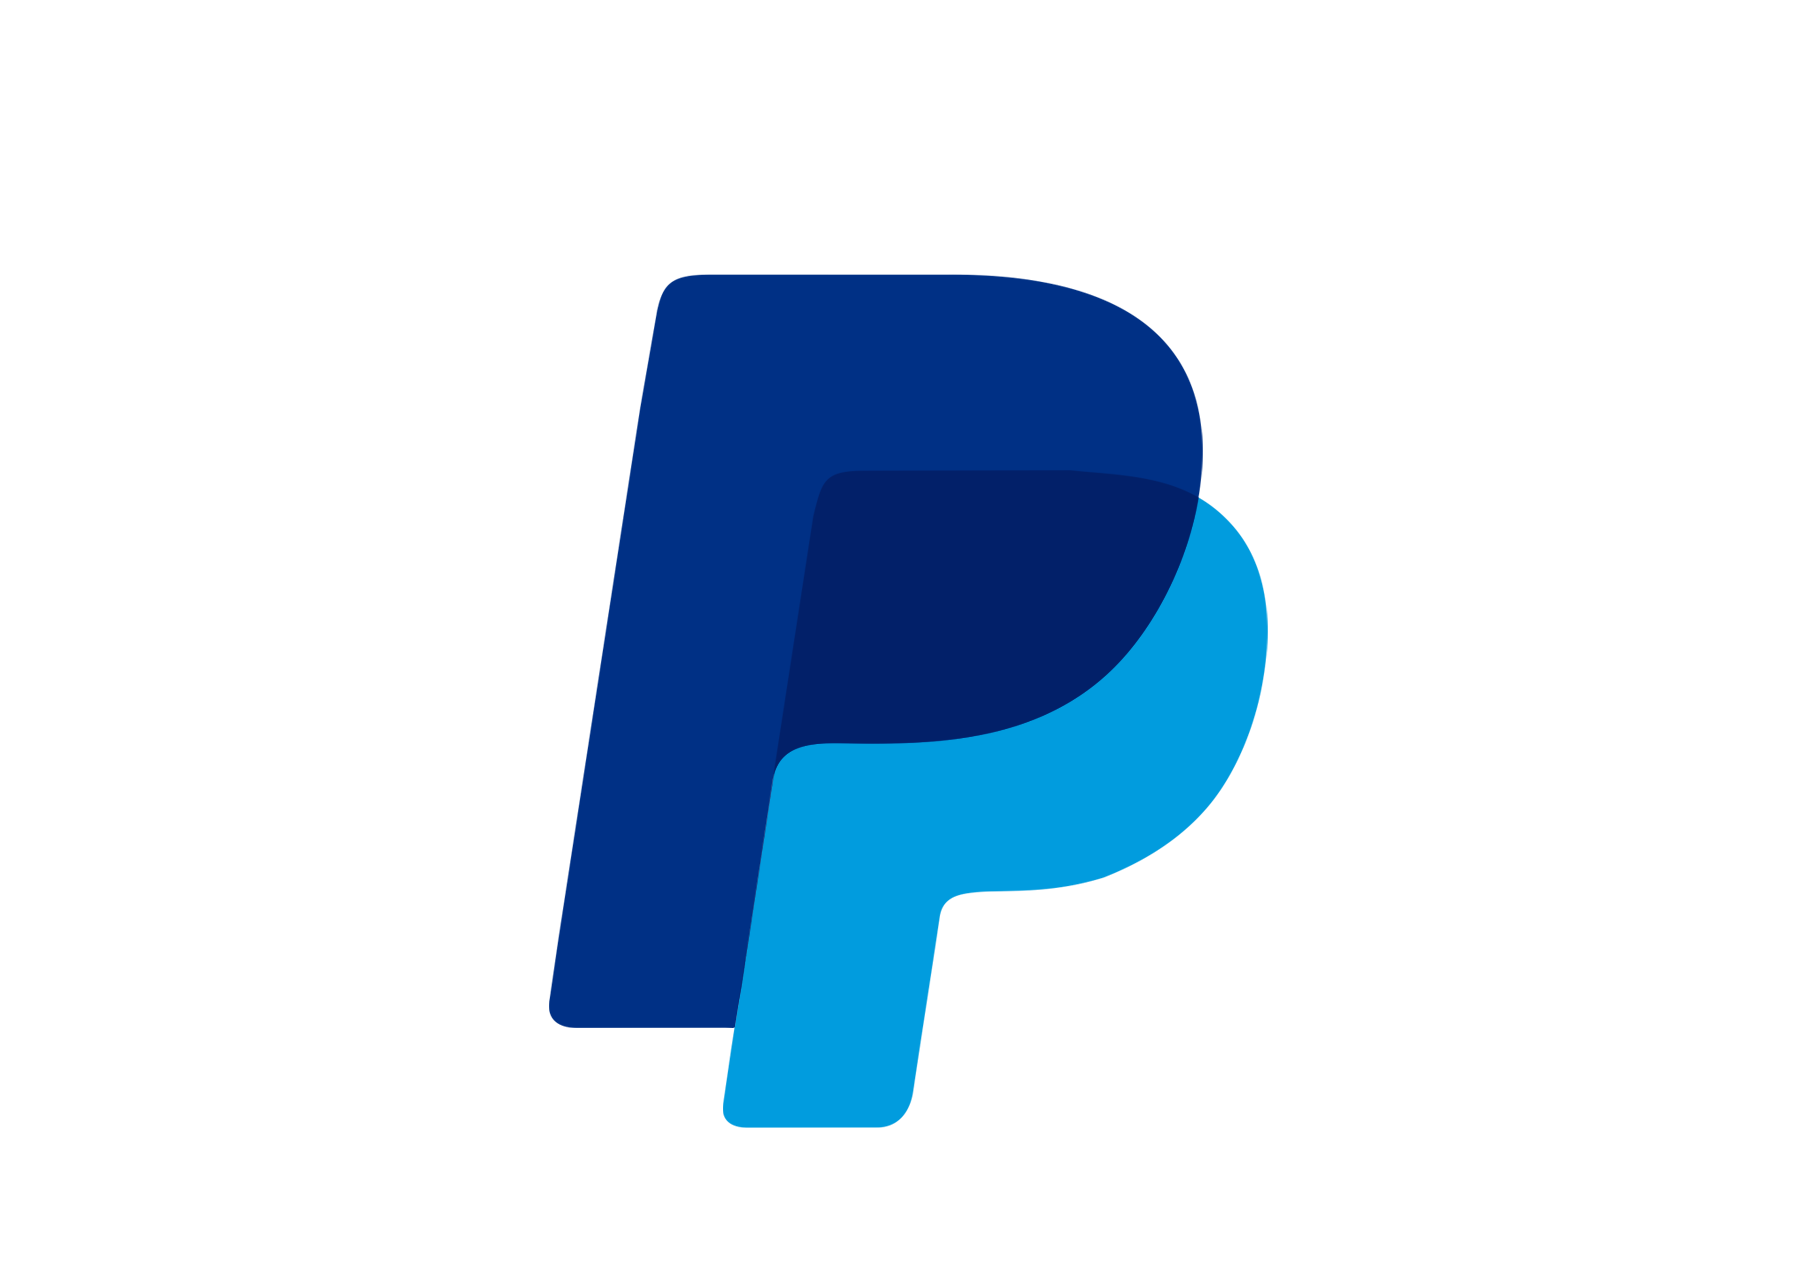 File:PayPal 2014 logo.svg